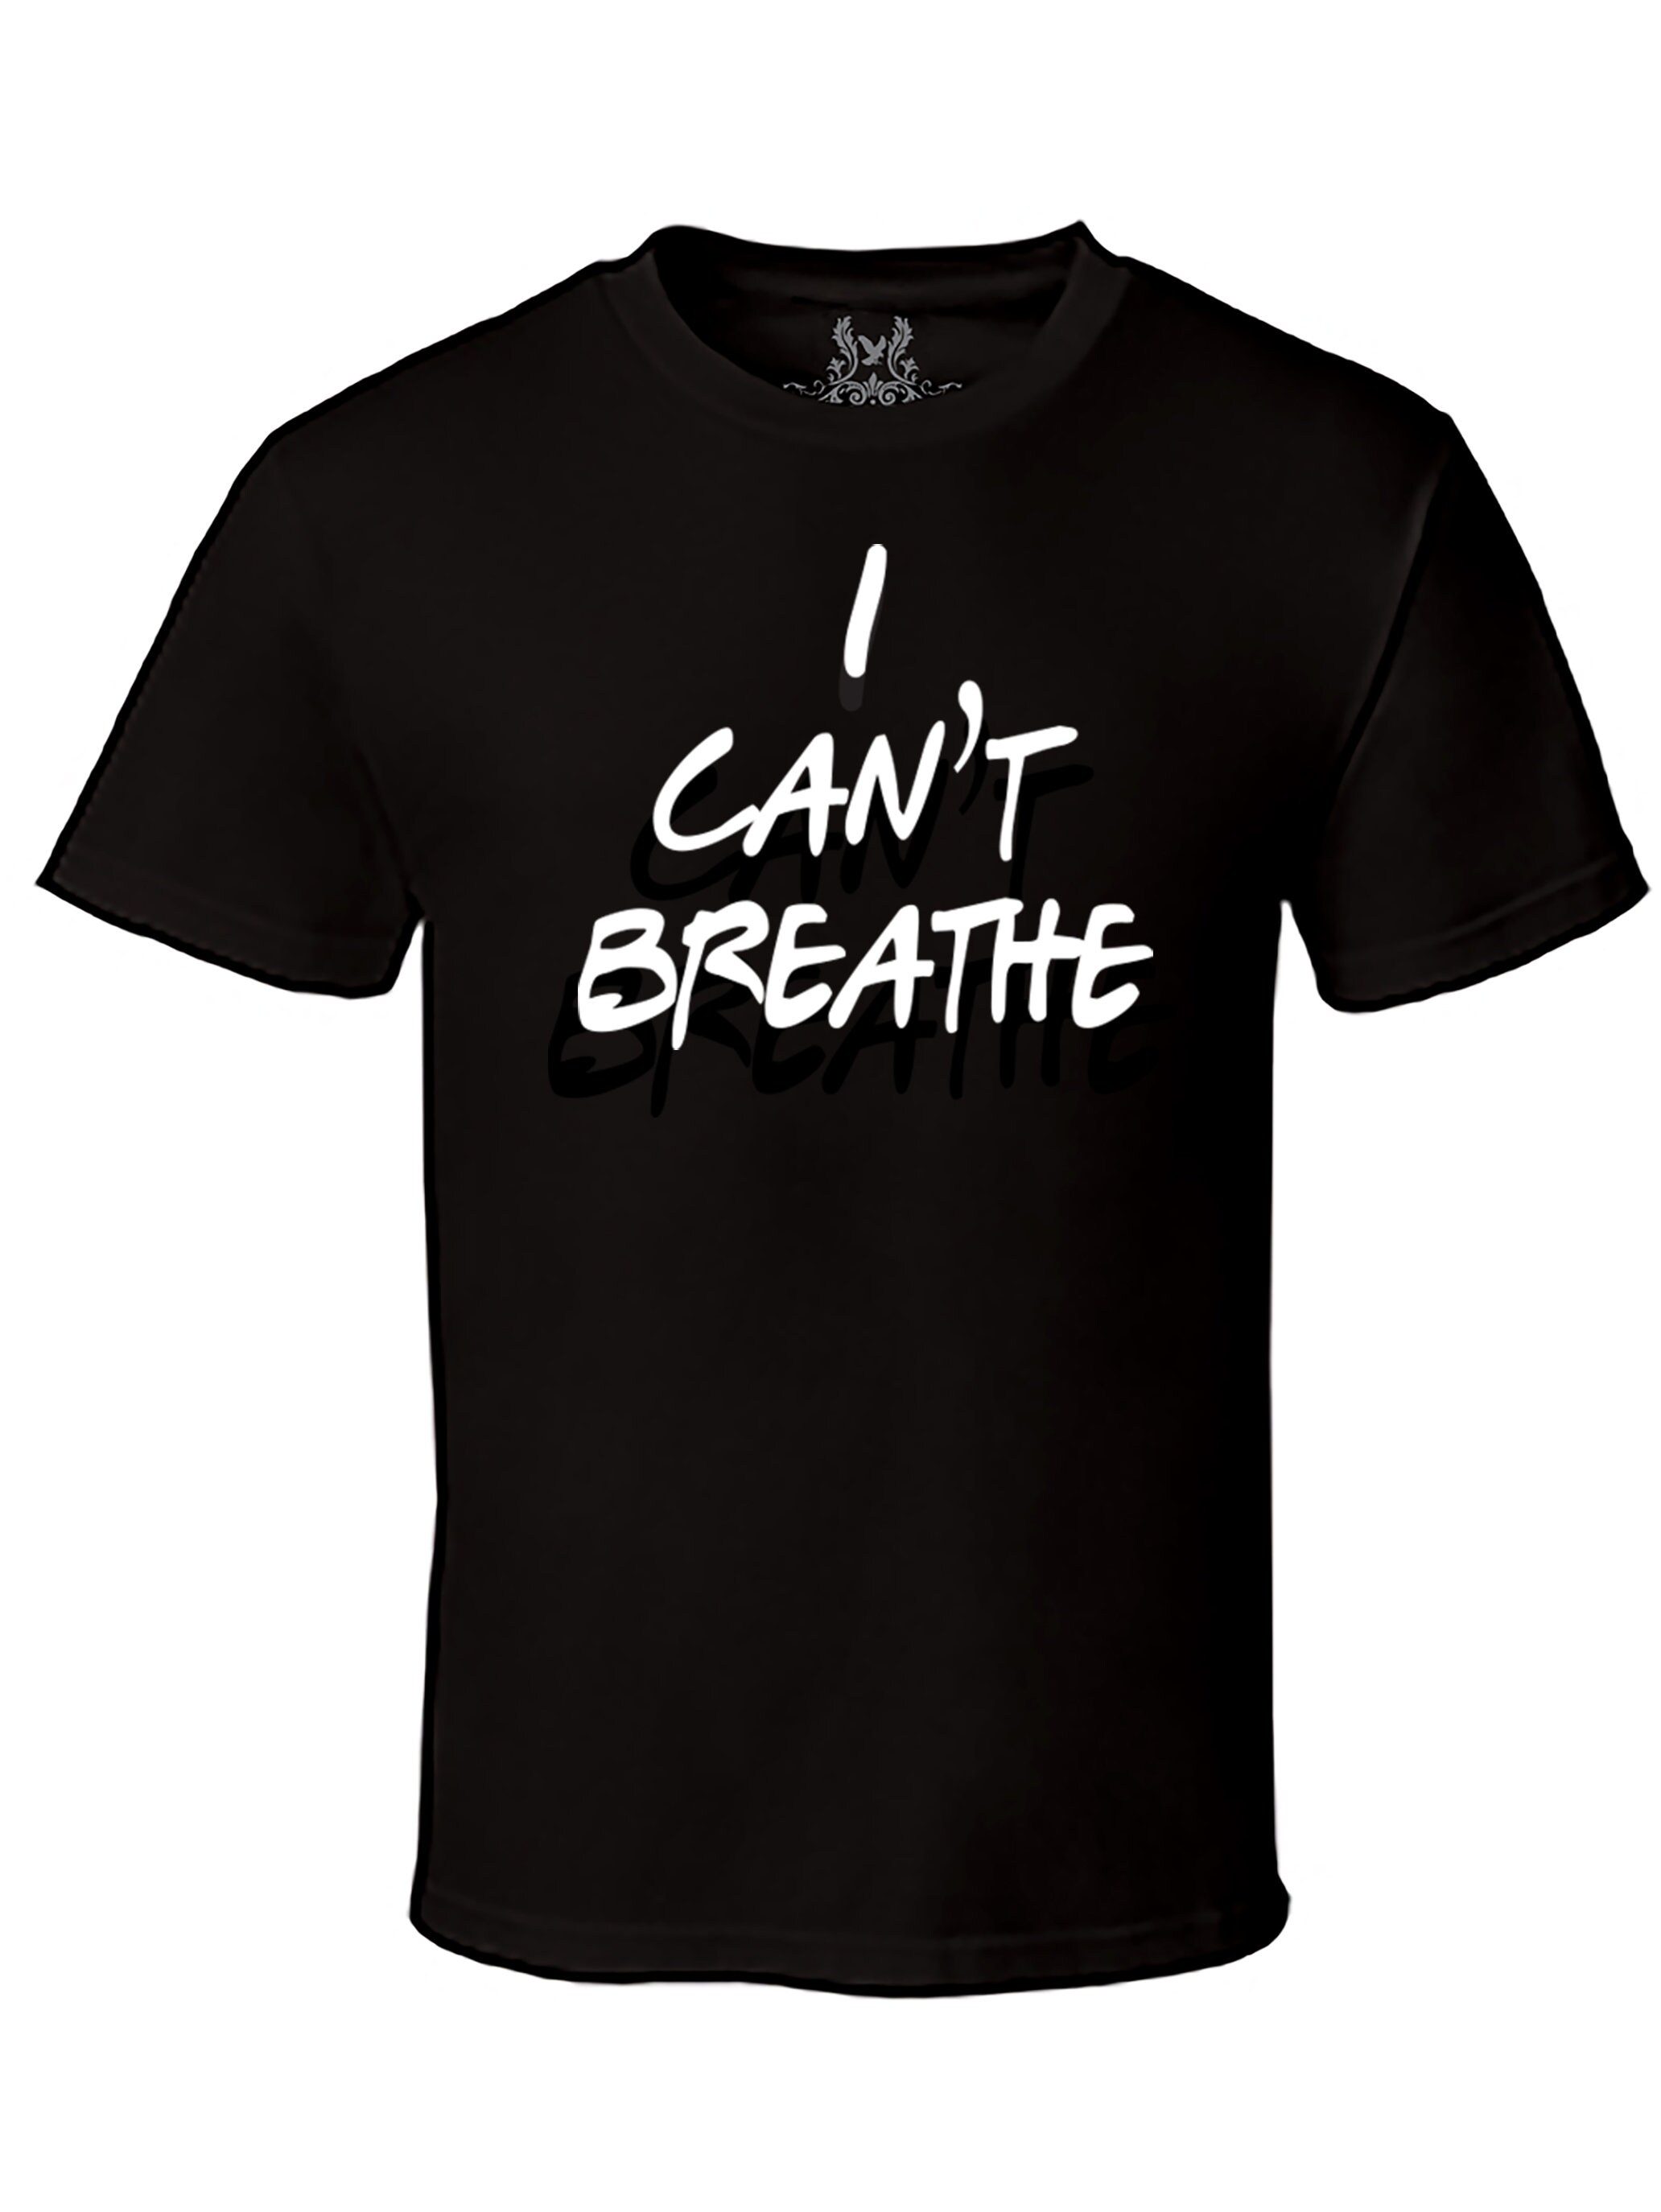 no puedo respirar anti racismo protesta George Camisa Materia vidas Negro T-Shirt